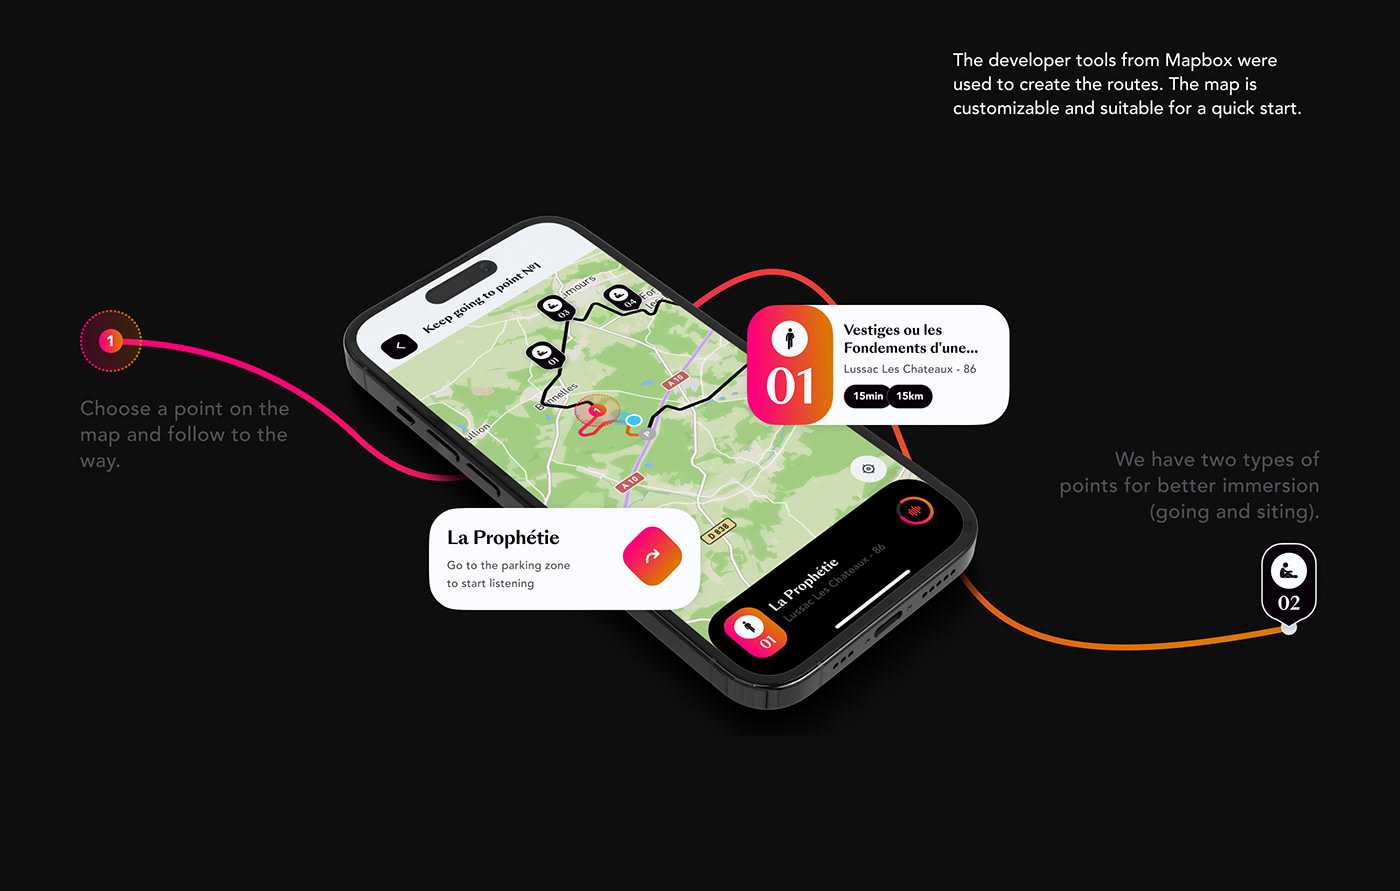 app design application audioguide Digital product design Mobile app music player app travel guide user experience user interface user interface design